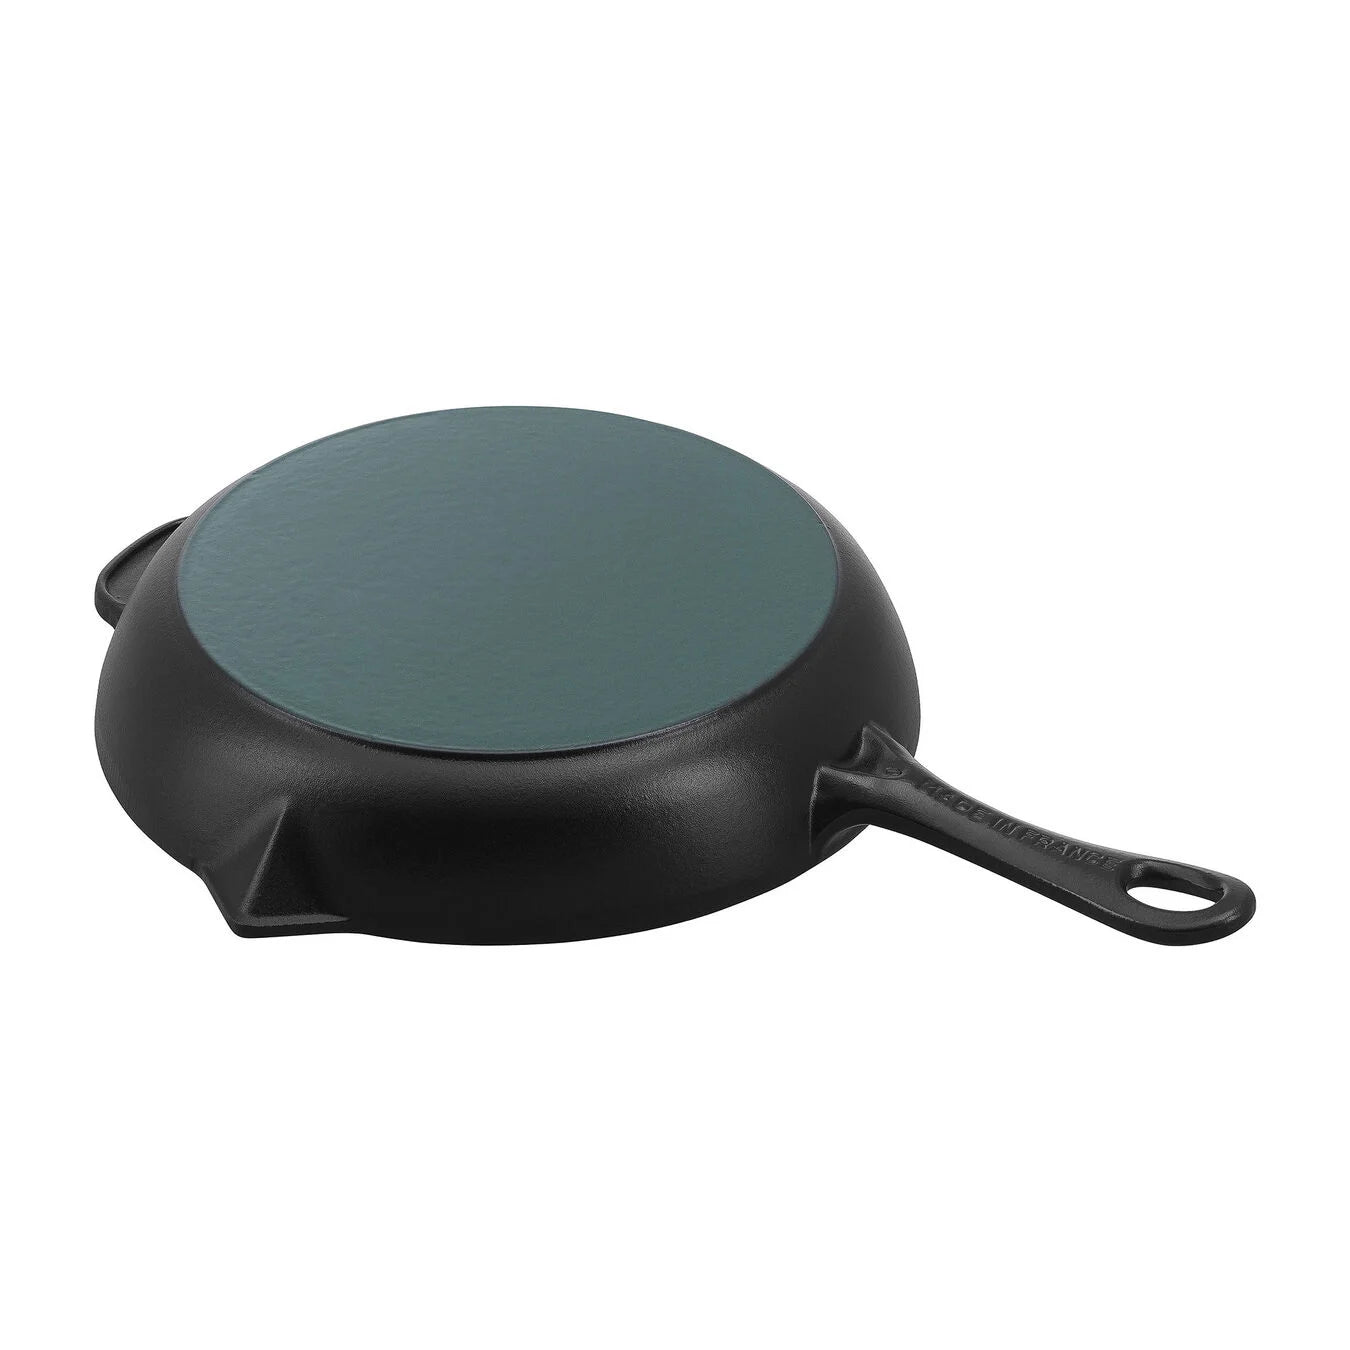 Staub Cast Iron - Fry Pans/ Skillets 10-inch, Fry Pan, black matte